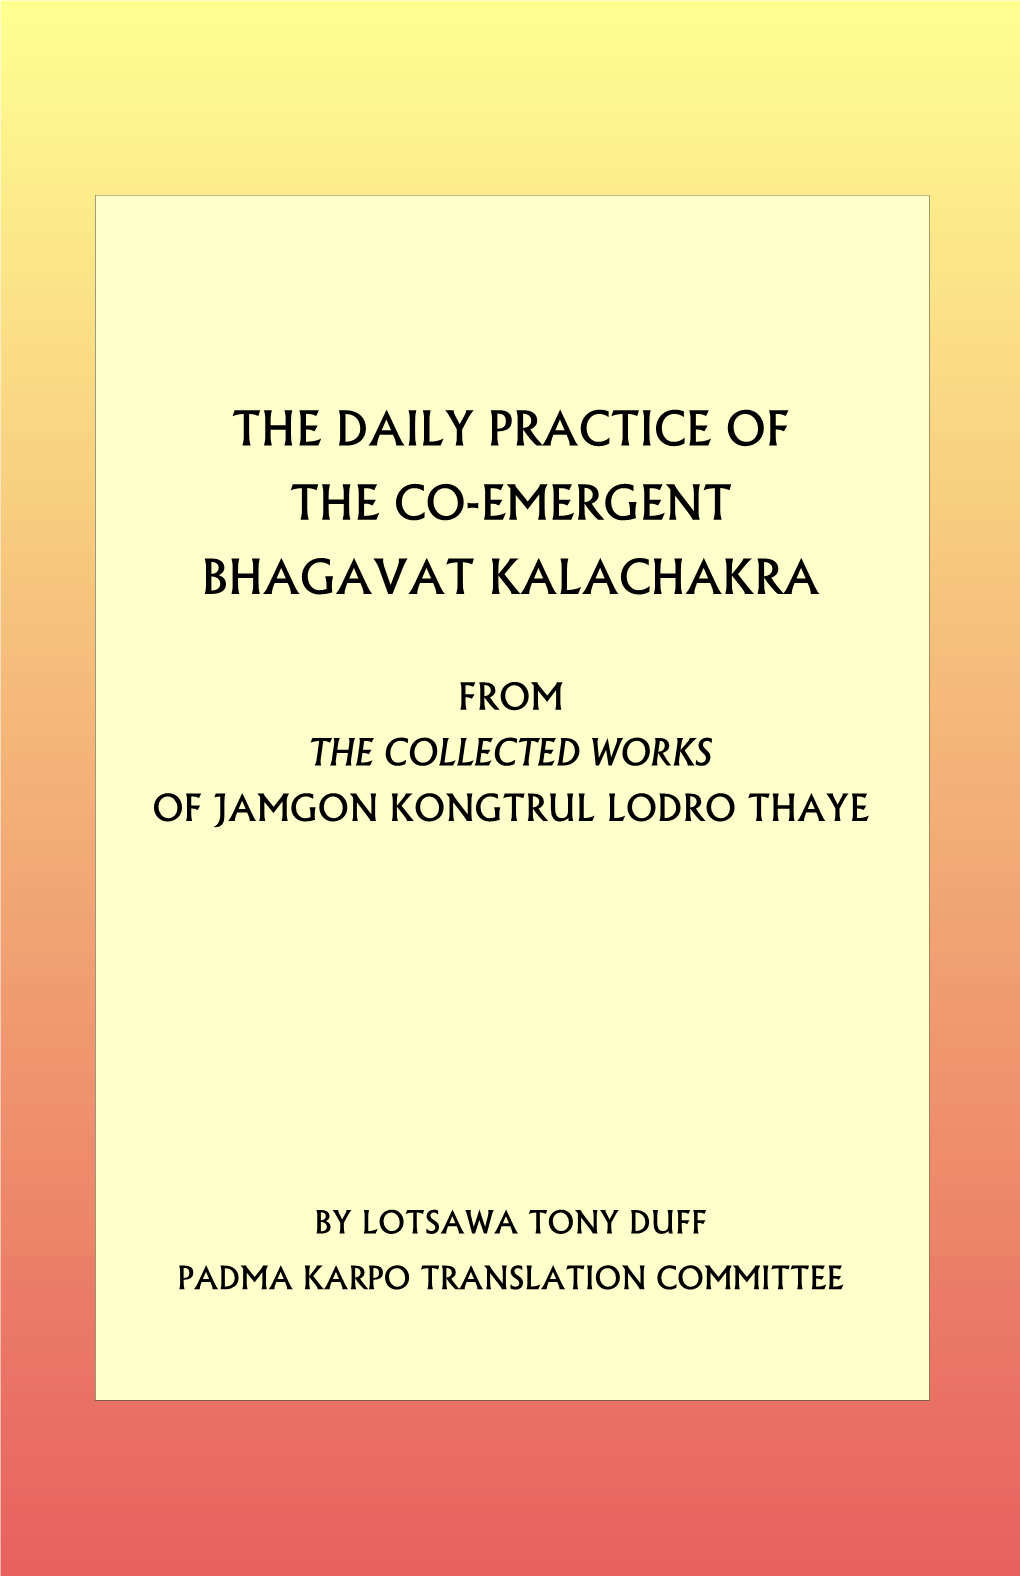 Daily Kalachakra Sadhana by Jamgon Kongtrul